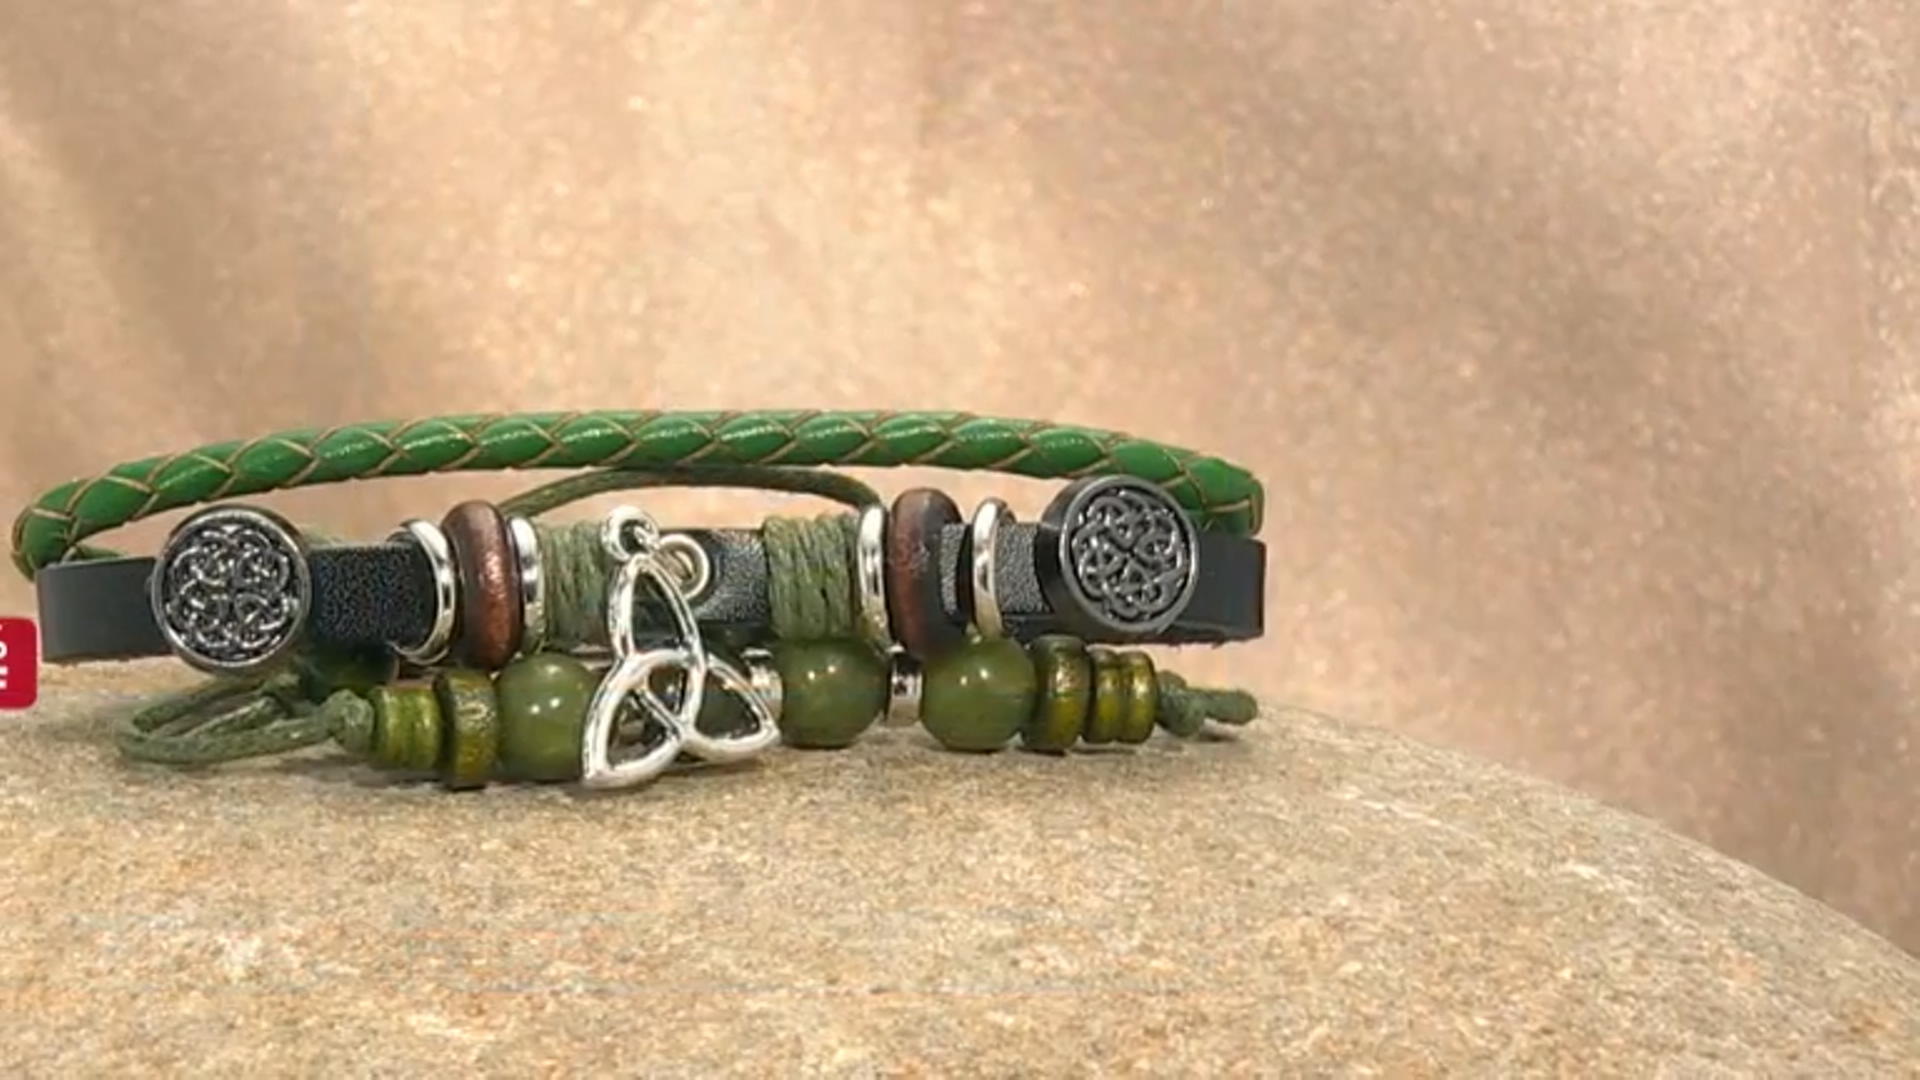 Green Connemara Marble Rhodium Over Brass Leather Charm Bracelet Video Thumbnail